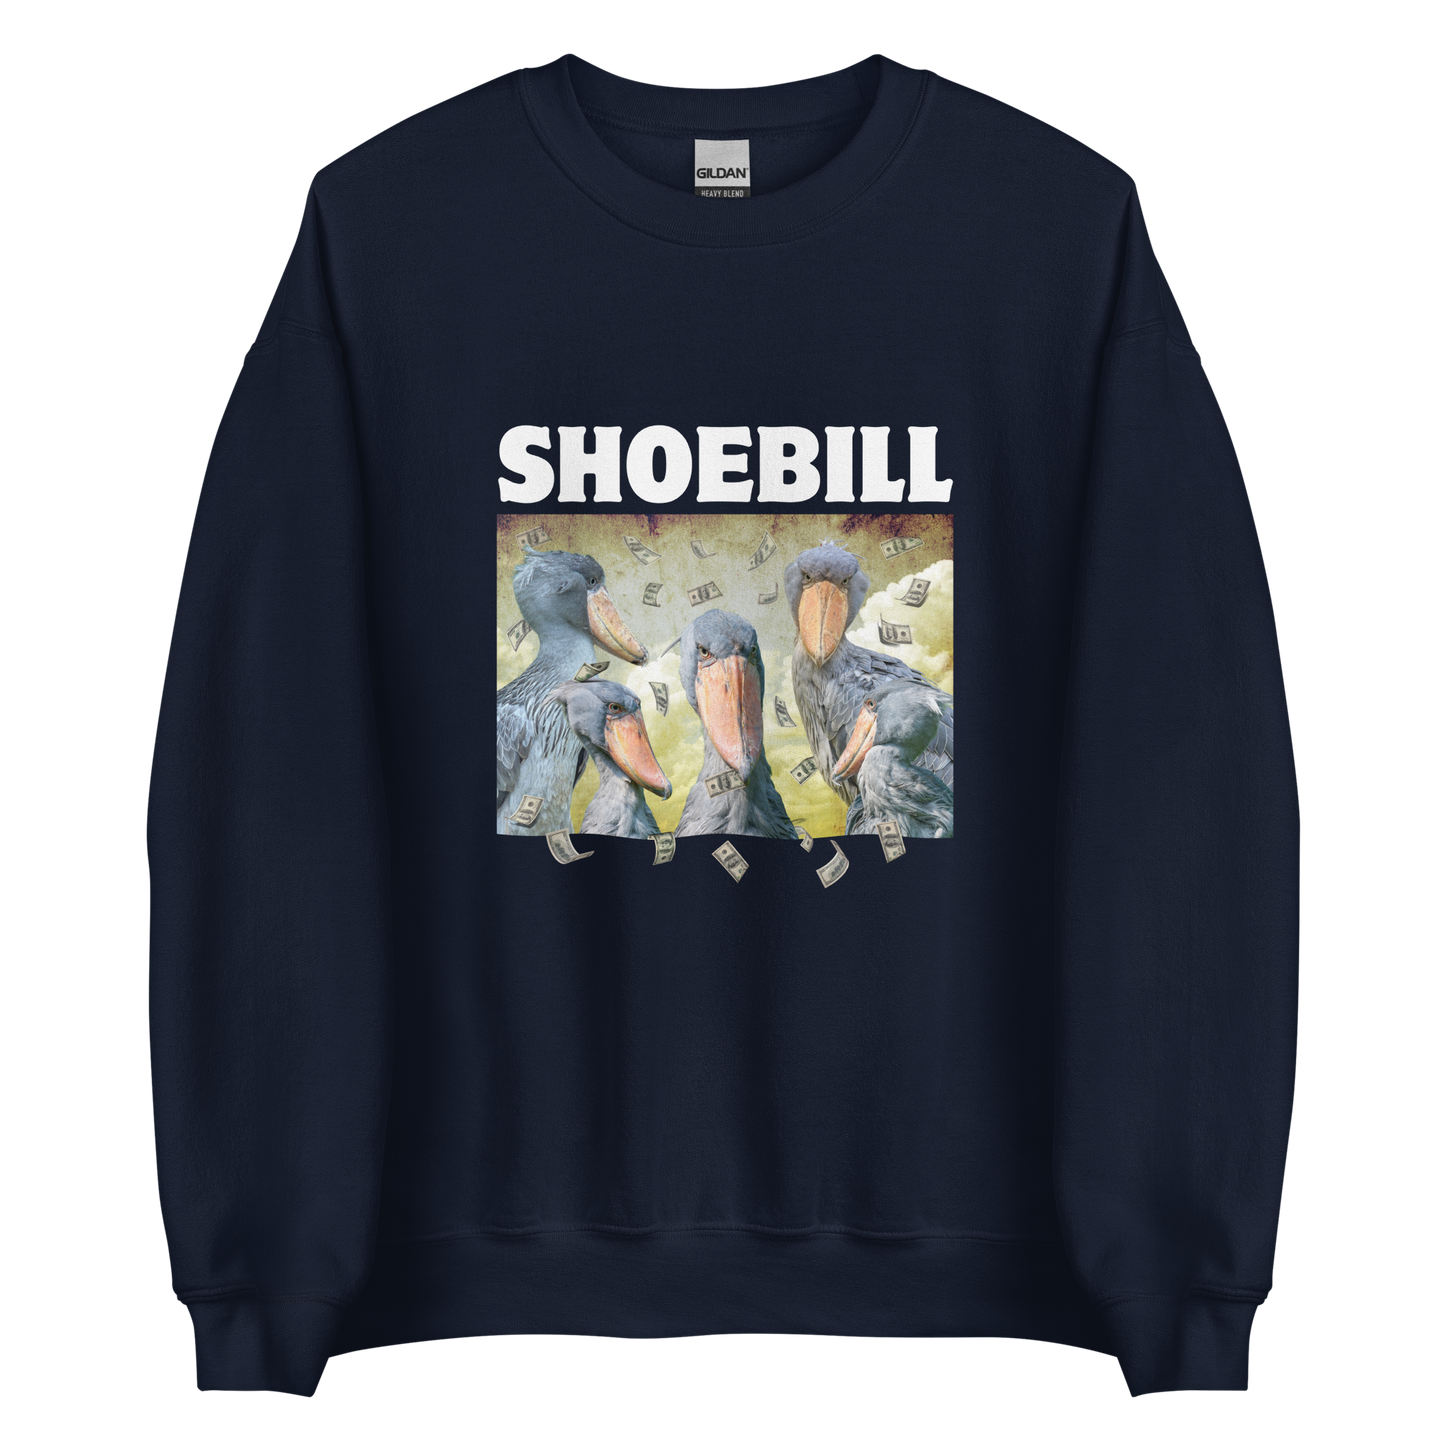 Navy Shoebill Sweatshirt featuring a cool Shoebill graphic on the chest - Artsy/Funny Graphic Shoebill Stork Sweatshirts - Boozy Fox